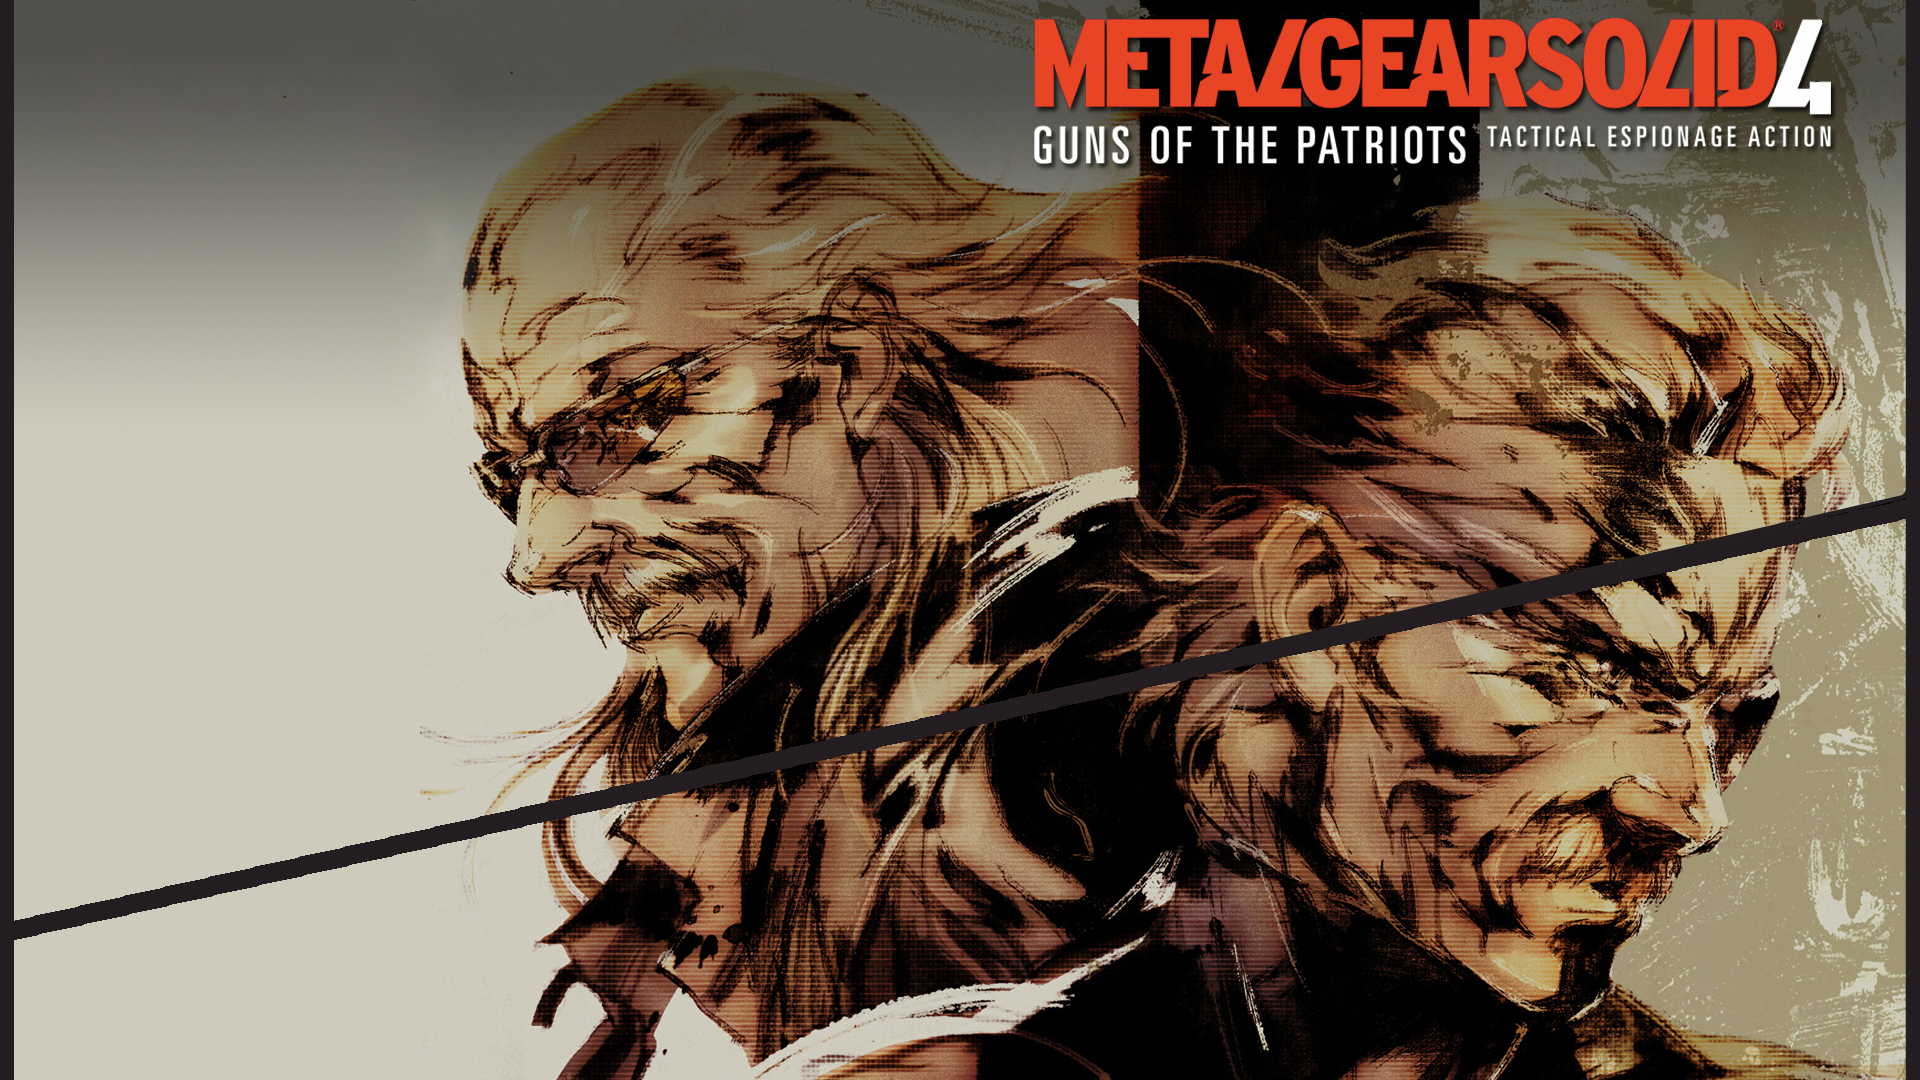 Metal Gear, video games, Metal Gear Solid, old snake, Revolver Ocelot, Metal Gear Solid 4 - desktop wallpaper